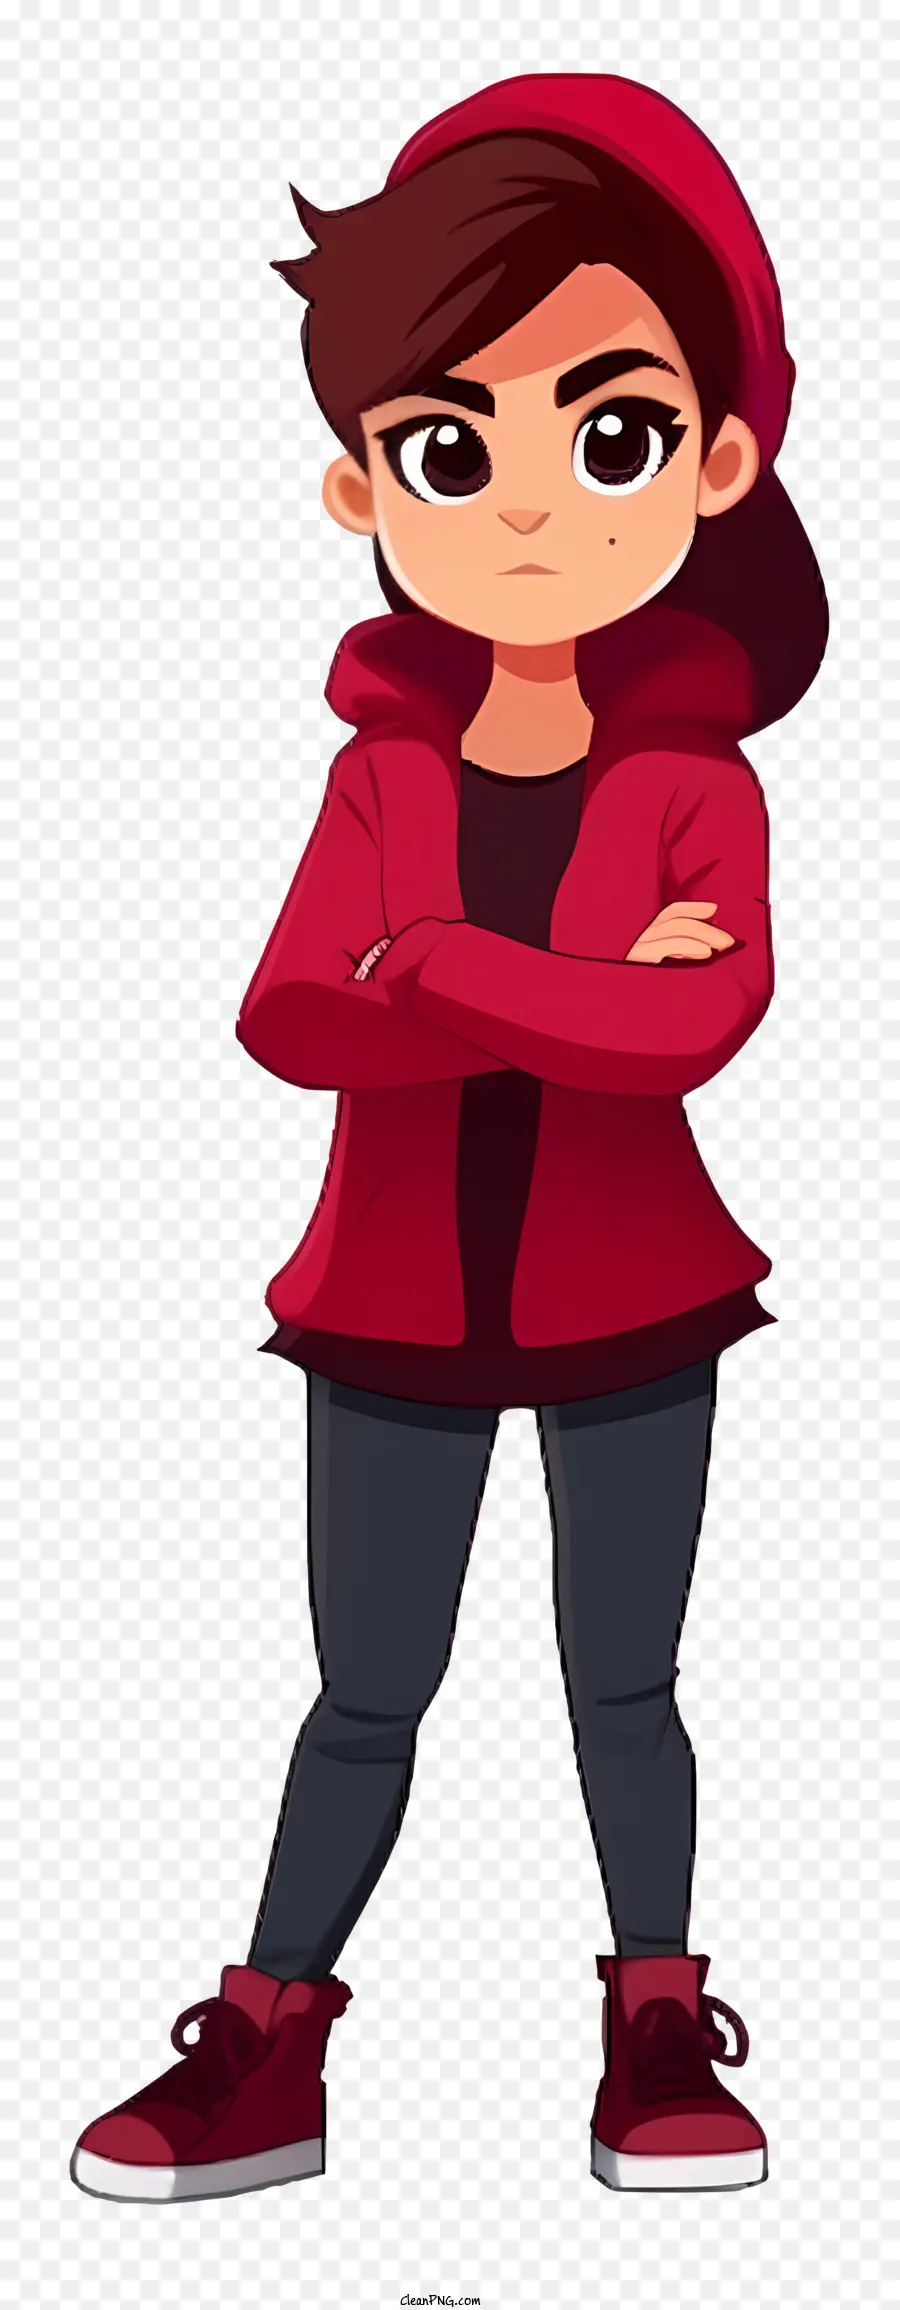 Cartoon Wear Red Day Young Person Red Giacca Rosso Pantaloni Black Espressione casual - Giovane in giacca rossa e pantaloni neri